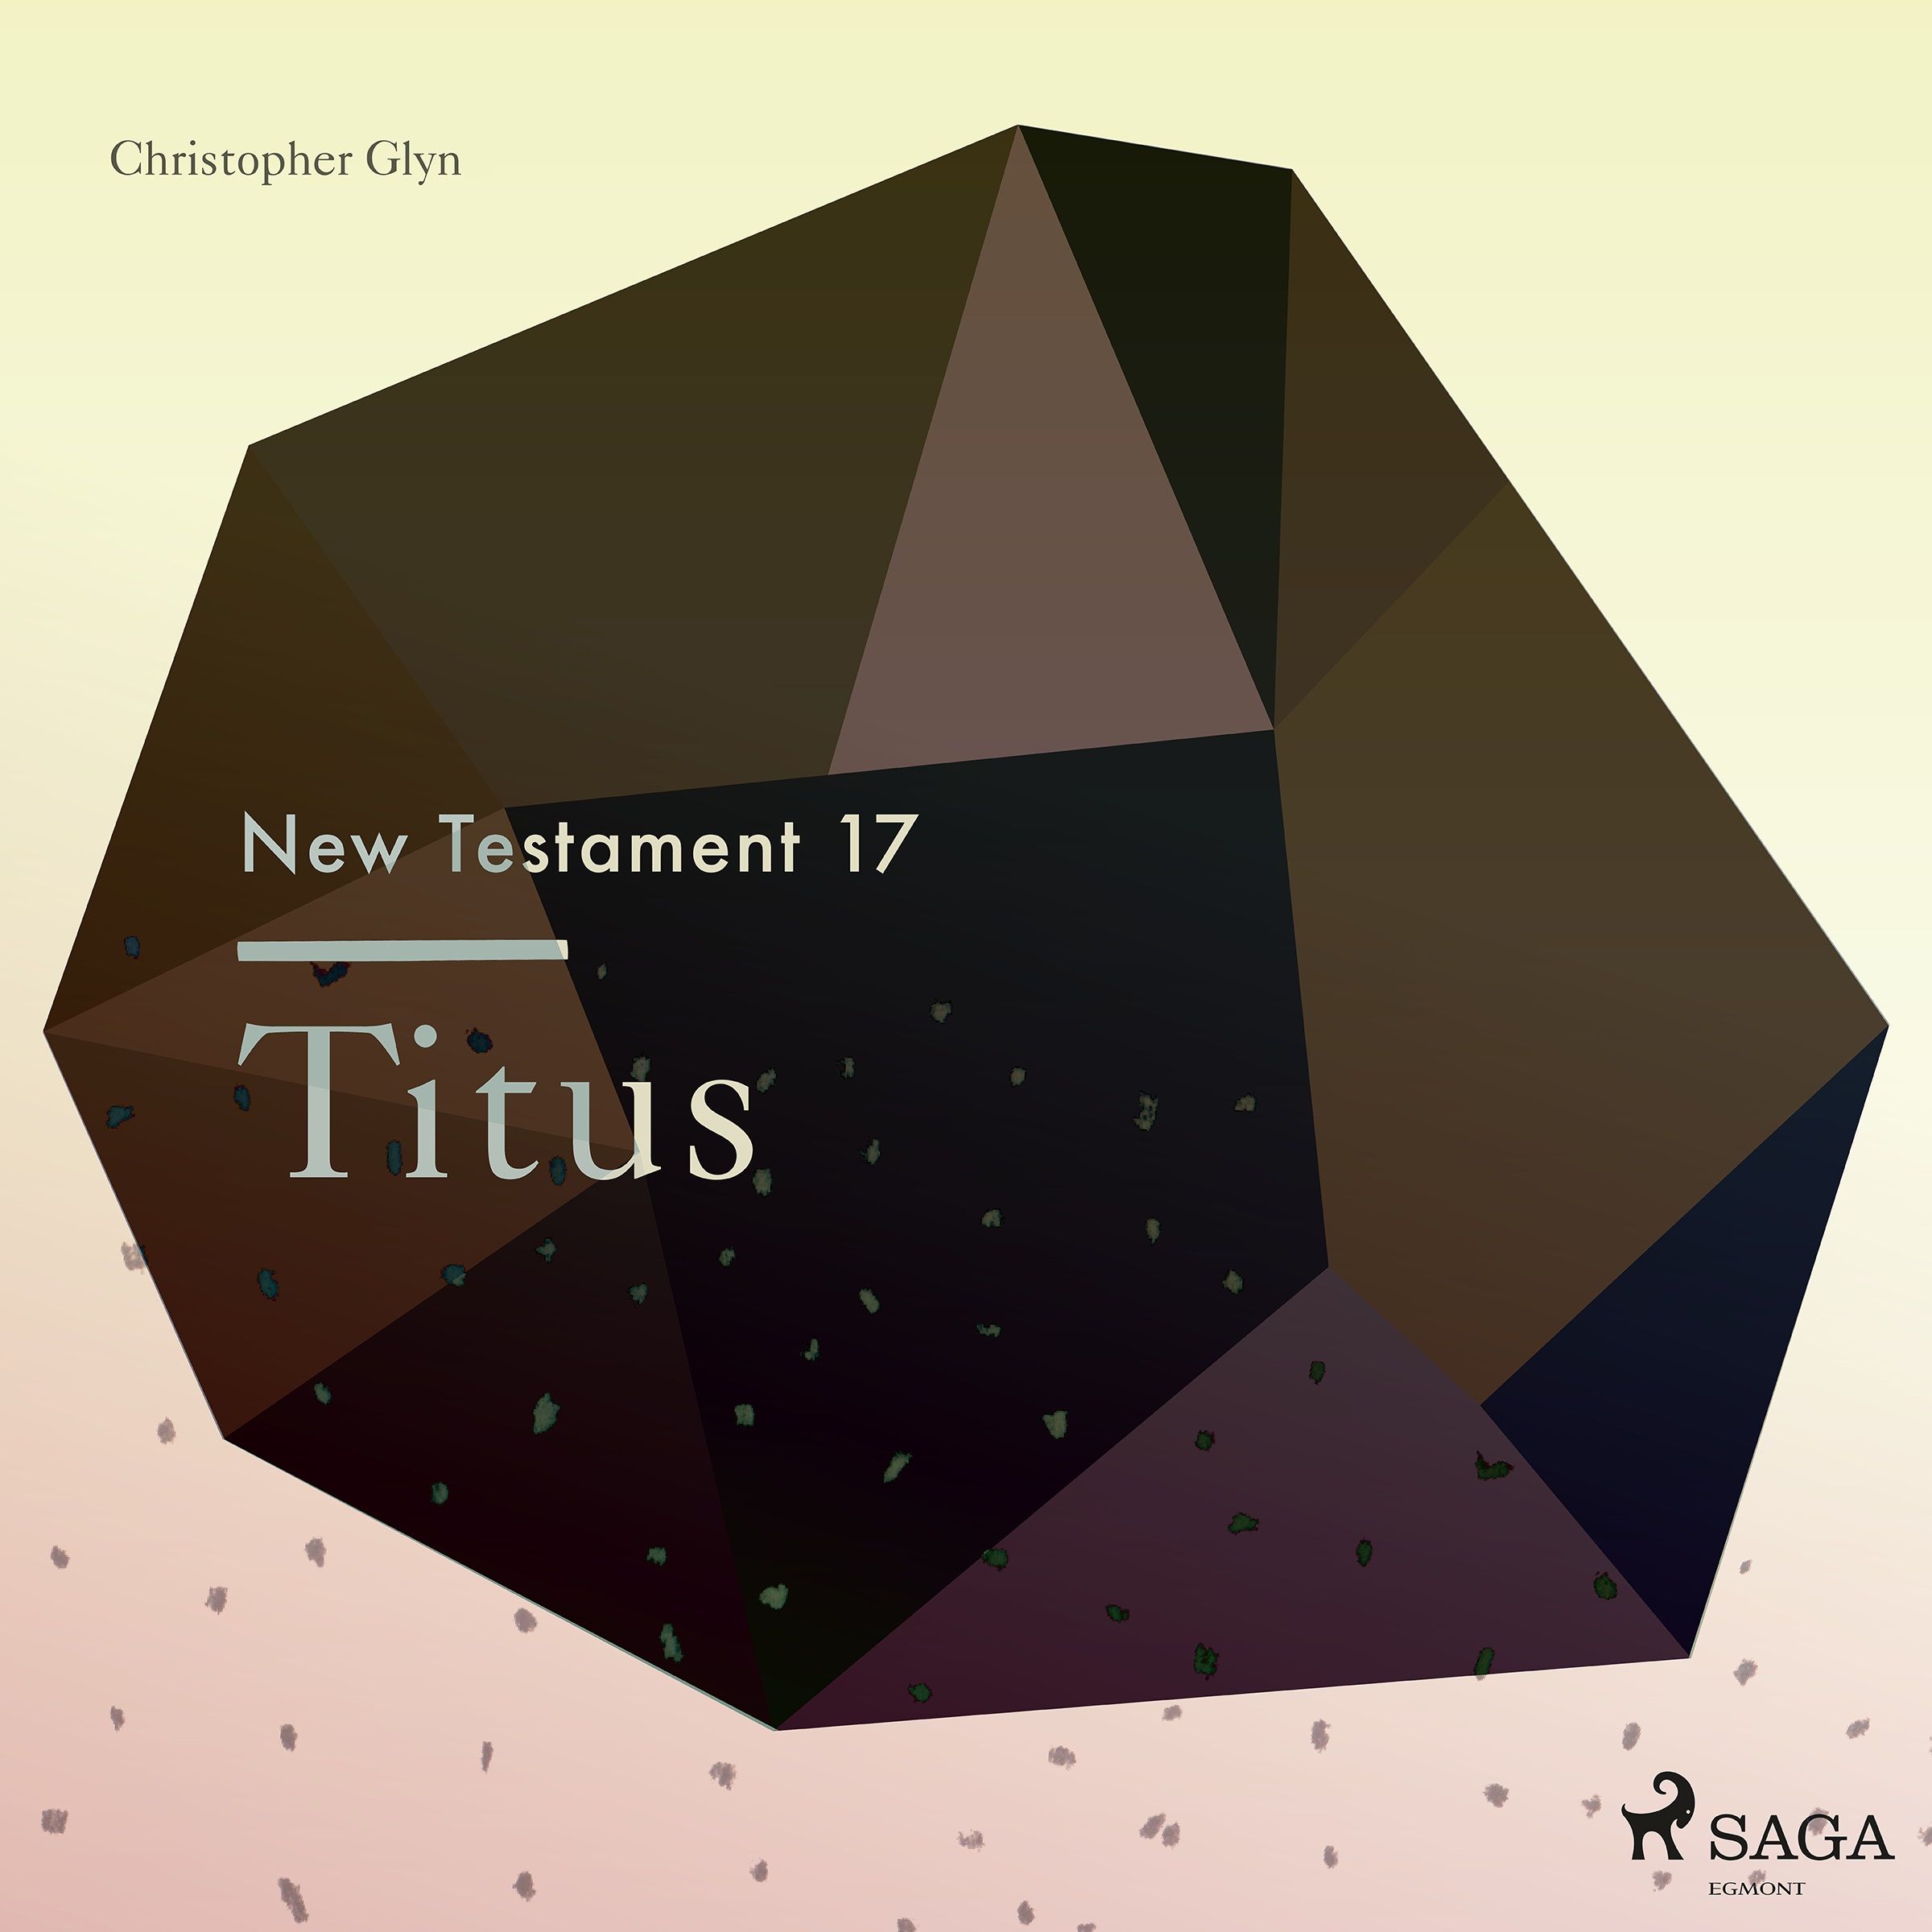 The New Testament 17 - Titus, ljudbok av Christopher Glyn